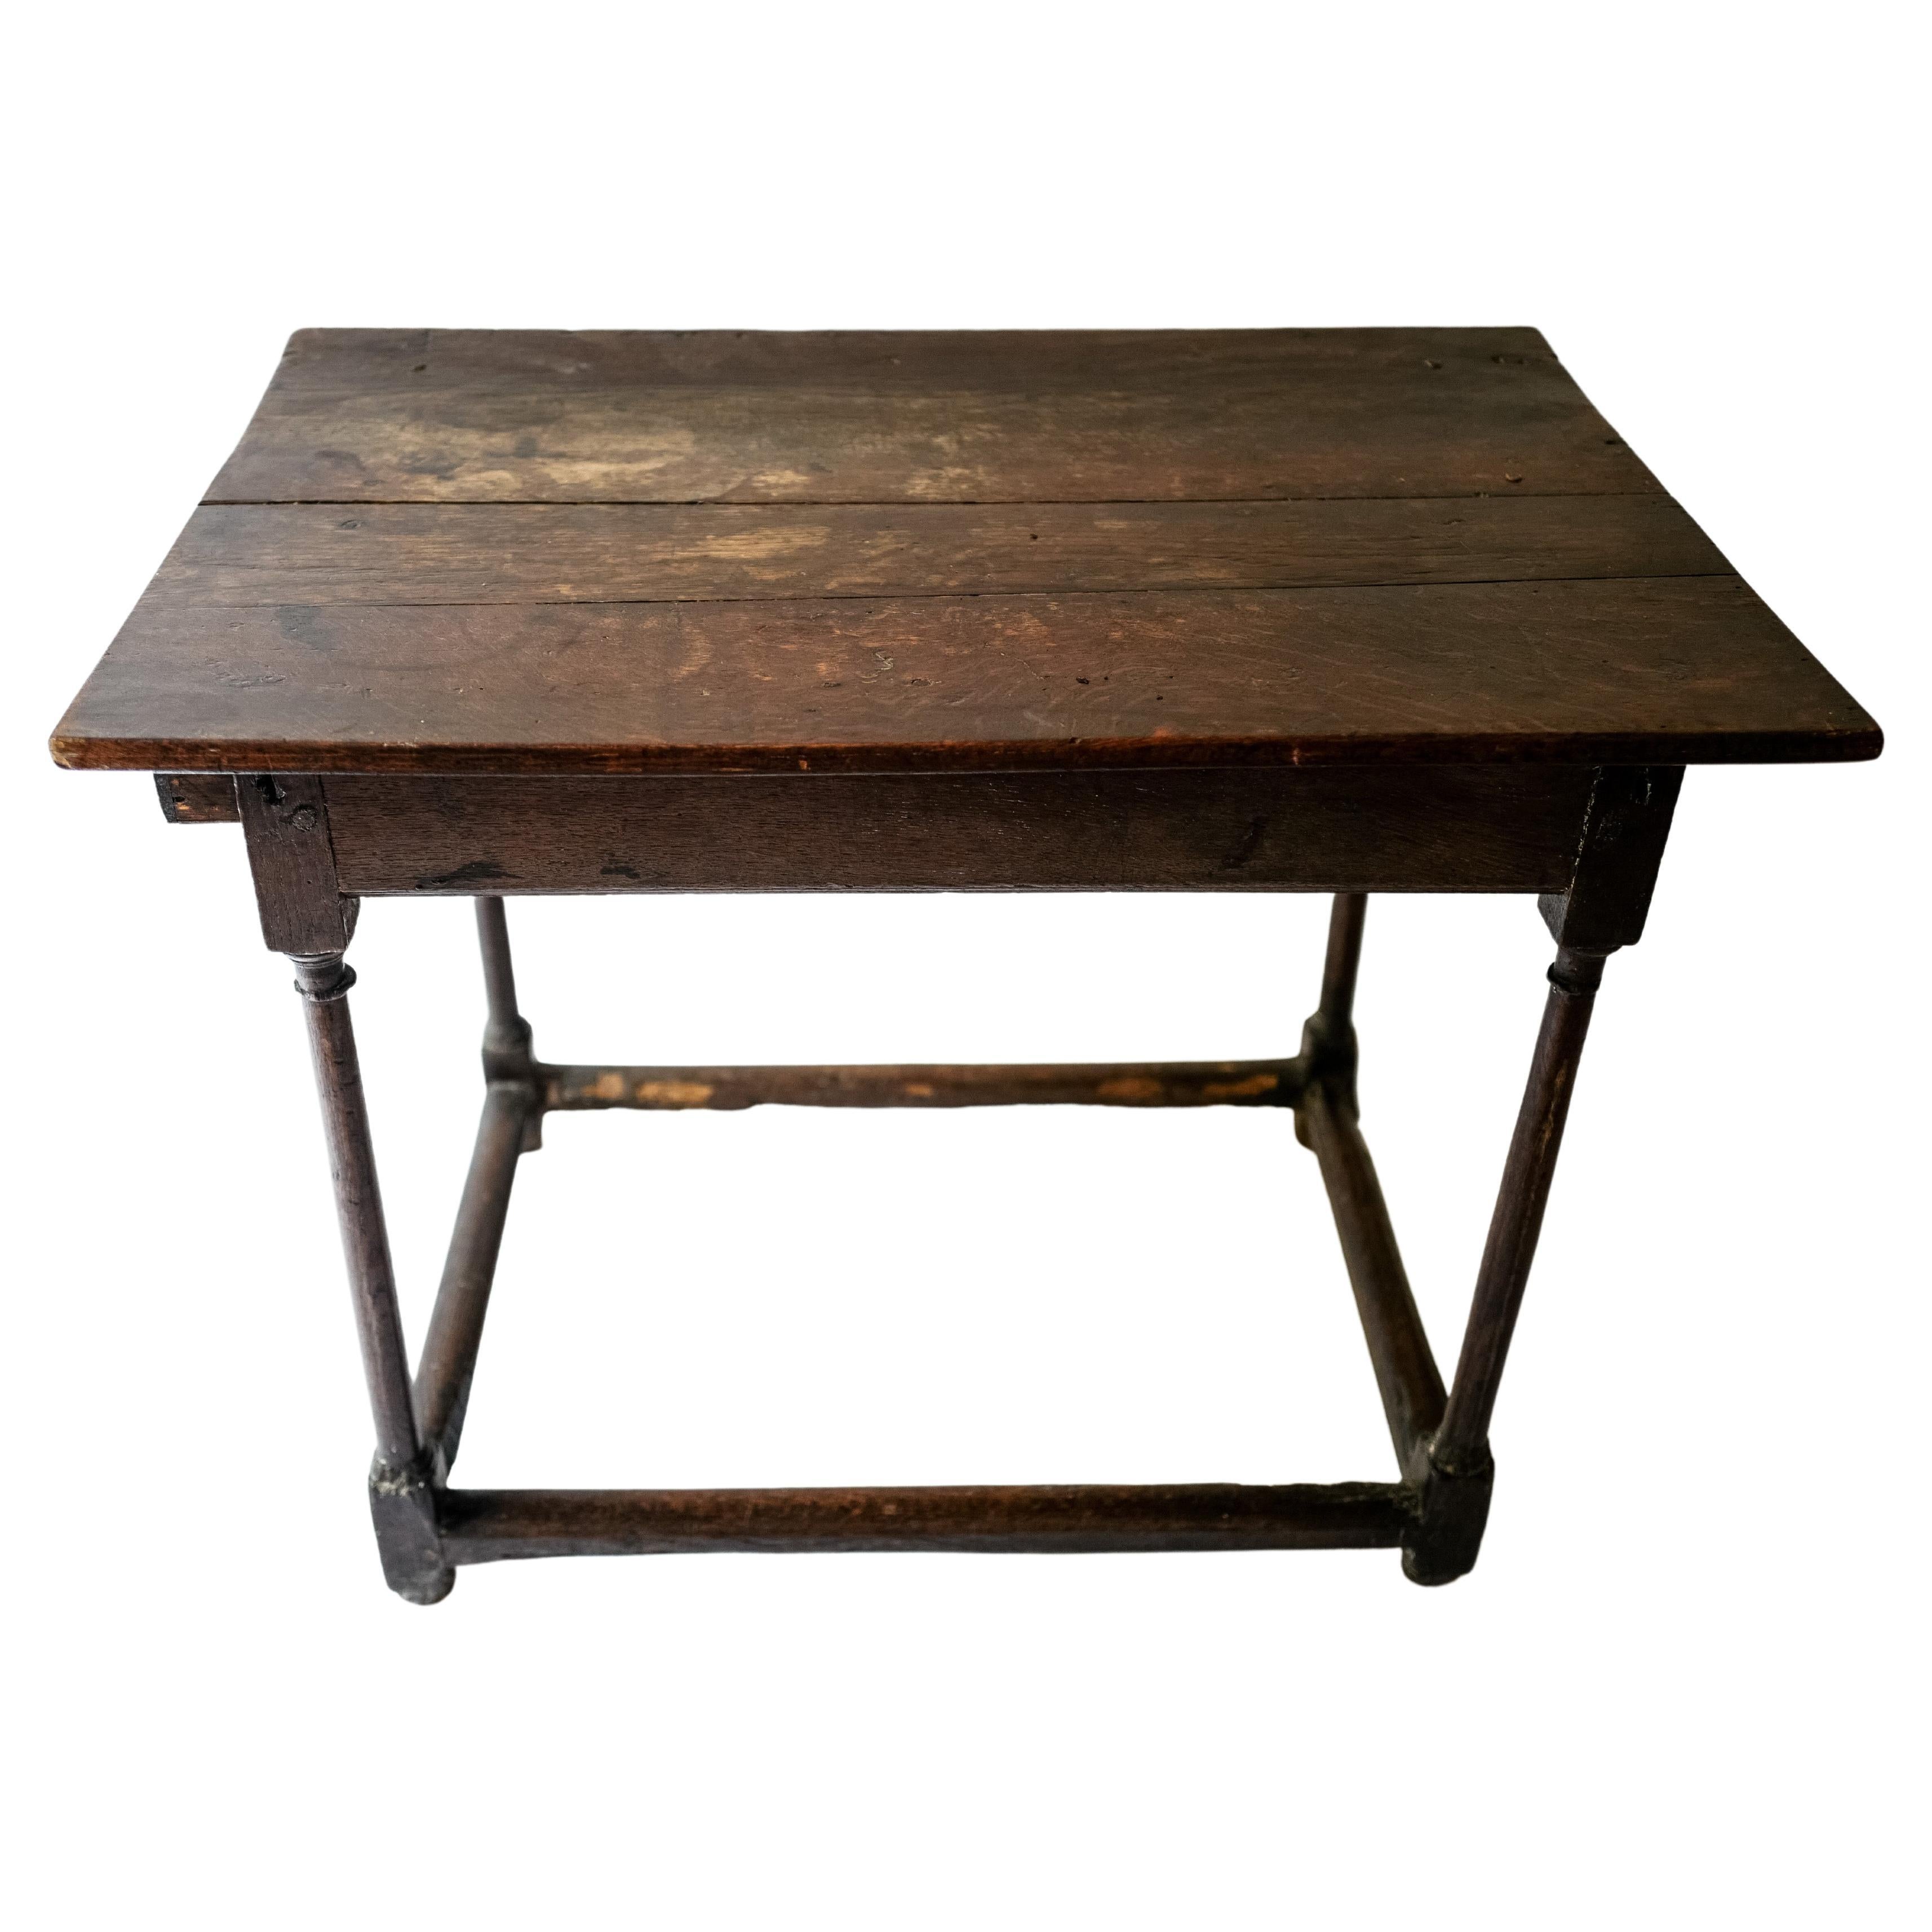 Louis XVI Oak Side Table Single Pull Out Drawer